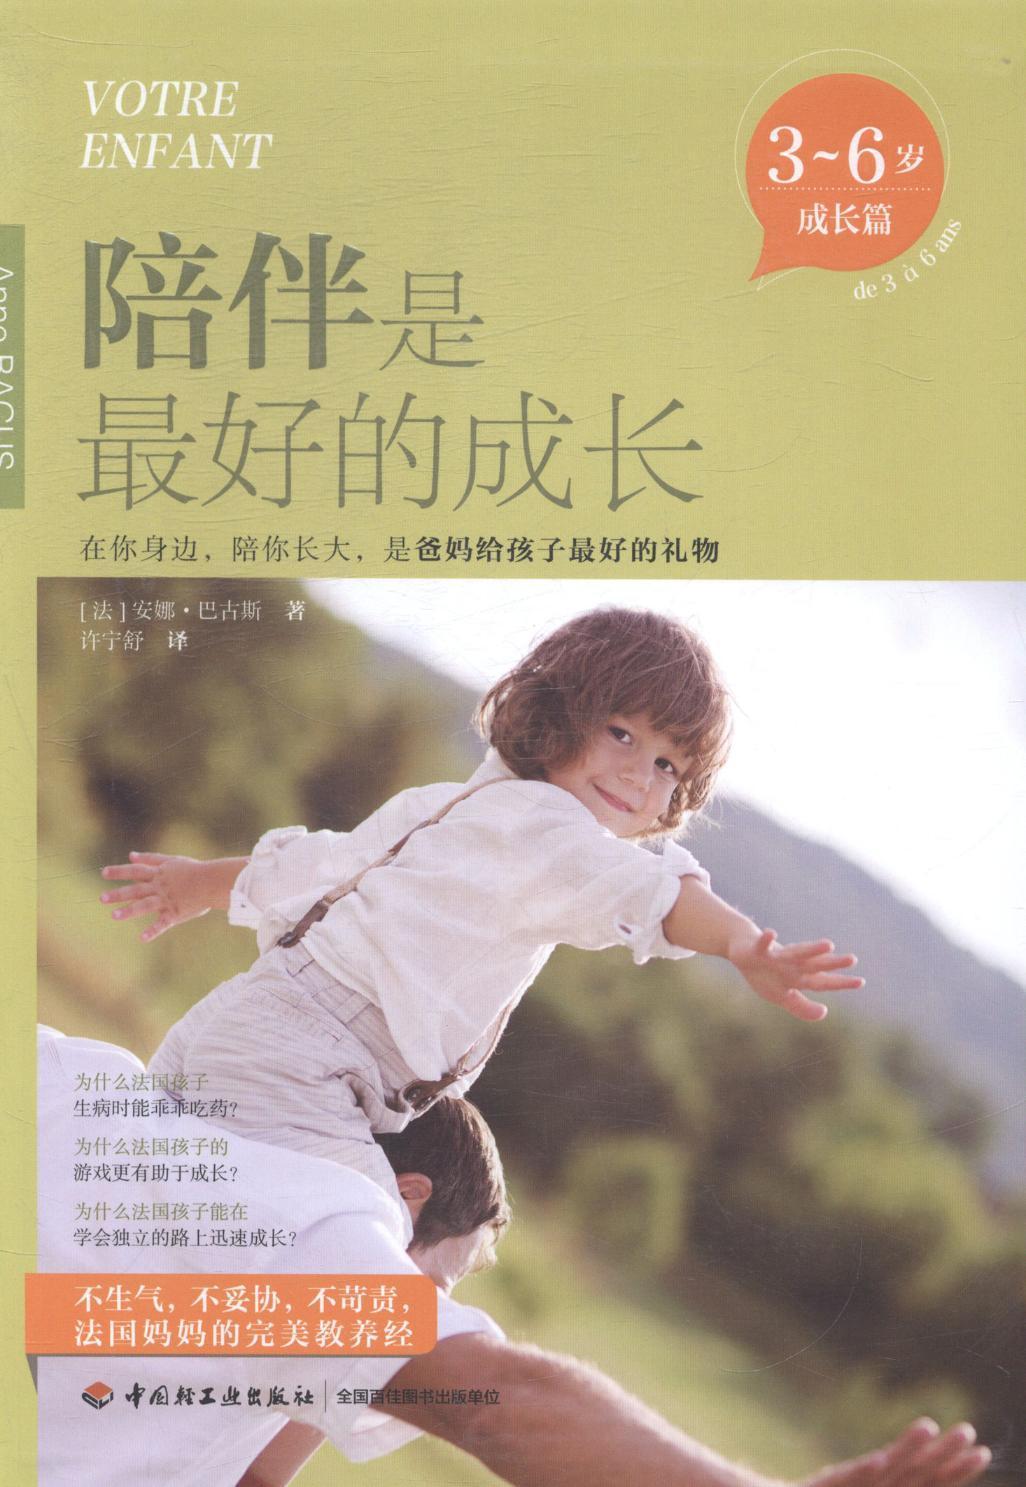 [rt] 陪伴是好的成长:3-6岁:成长篇:De 3 a 6 ans  安娜·巴古斯  中国轻工业出版社  育儿与家教  儿童教育家庭教育